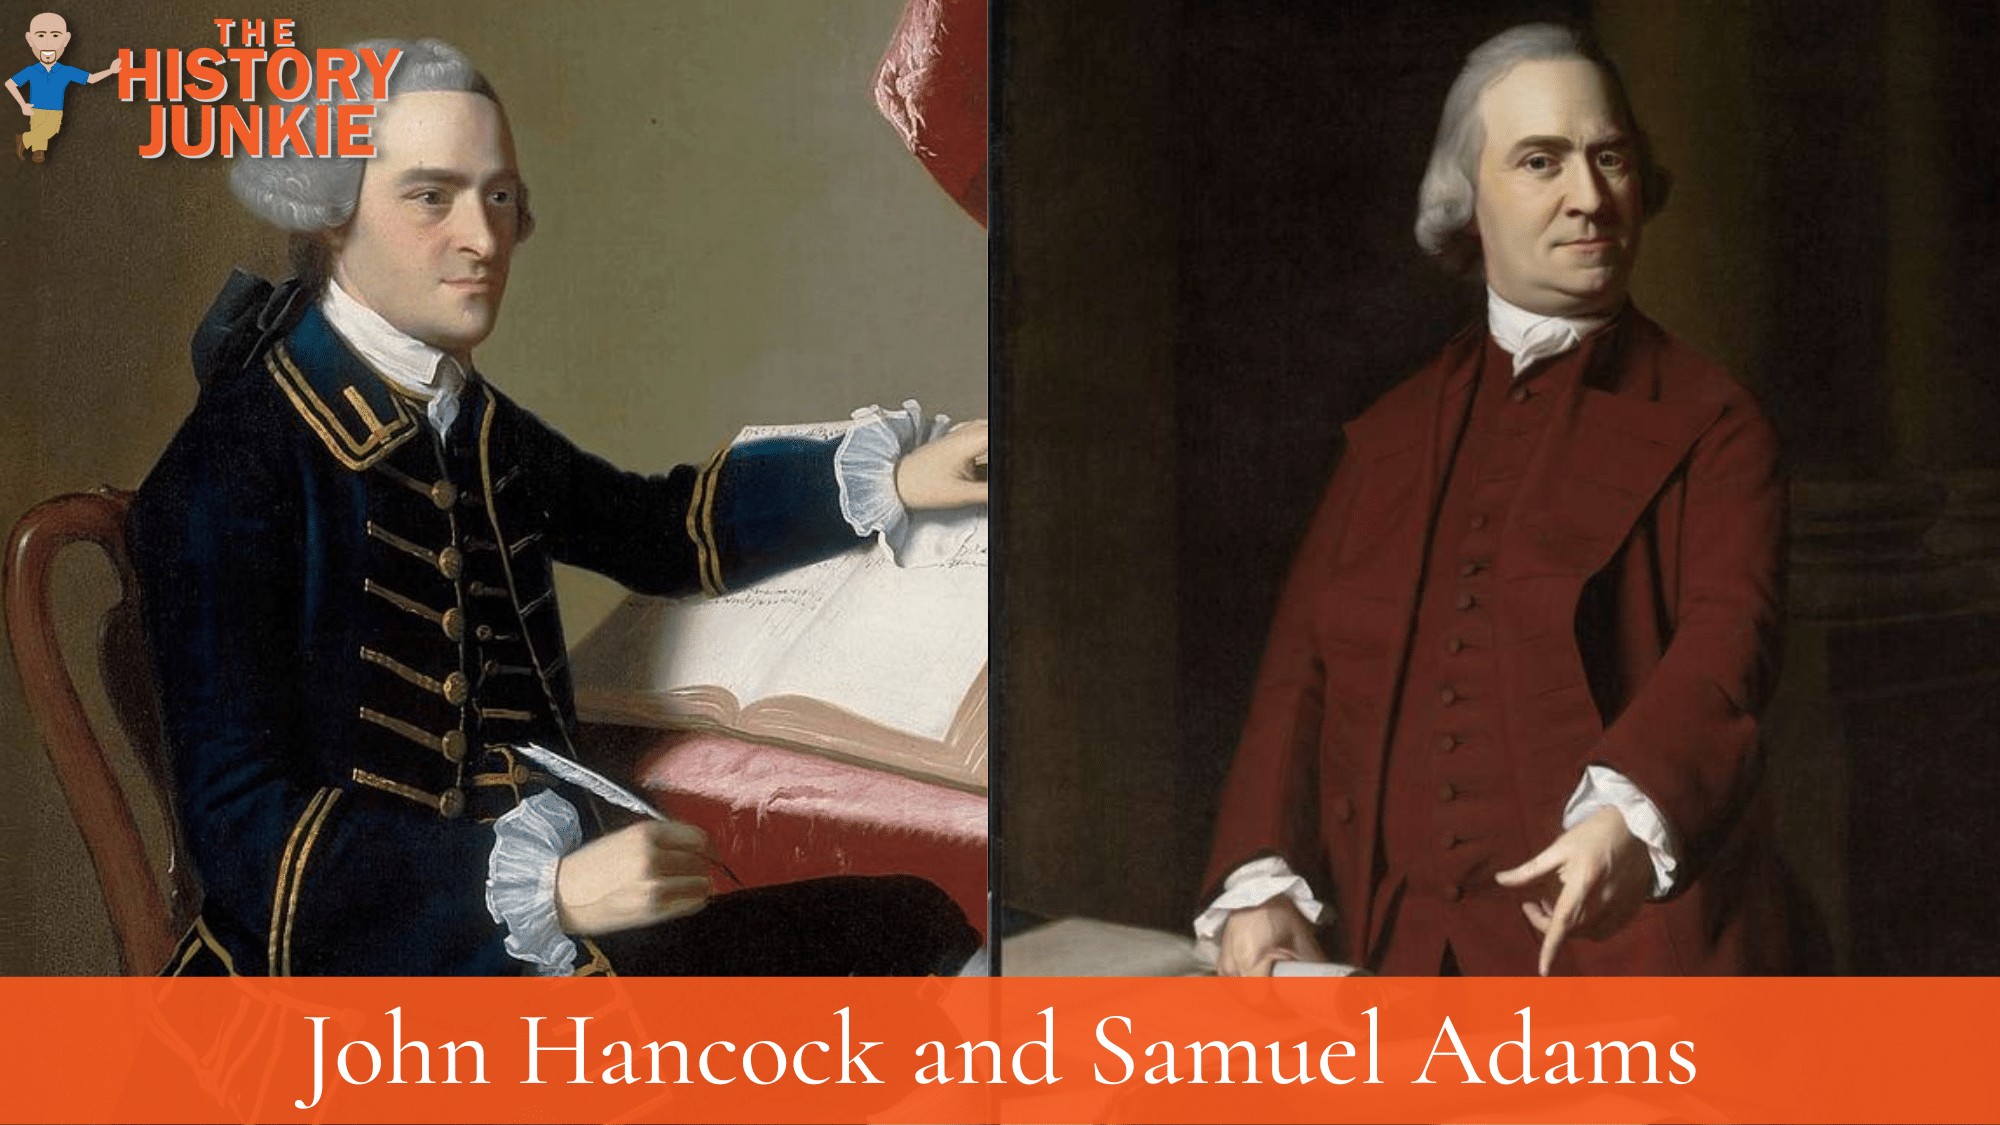 Samuel Adams and John Hancock